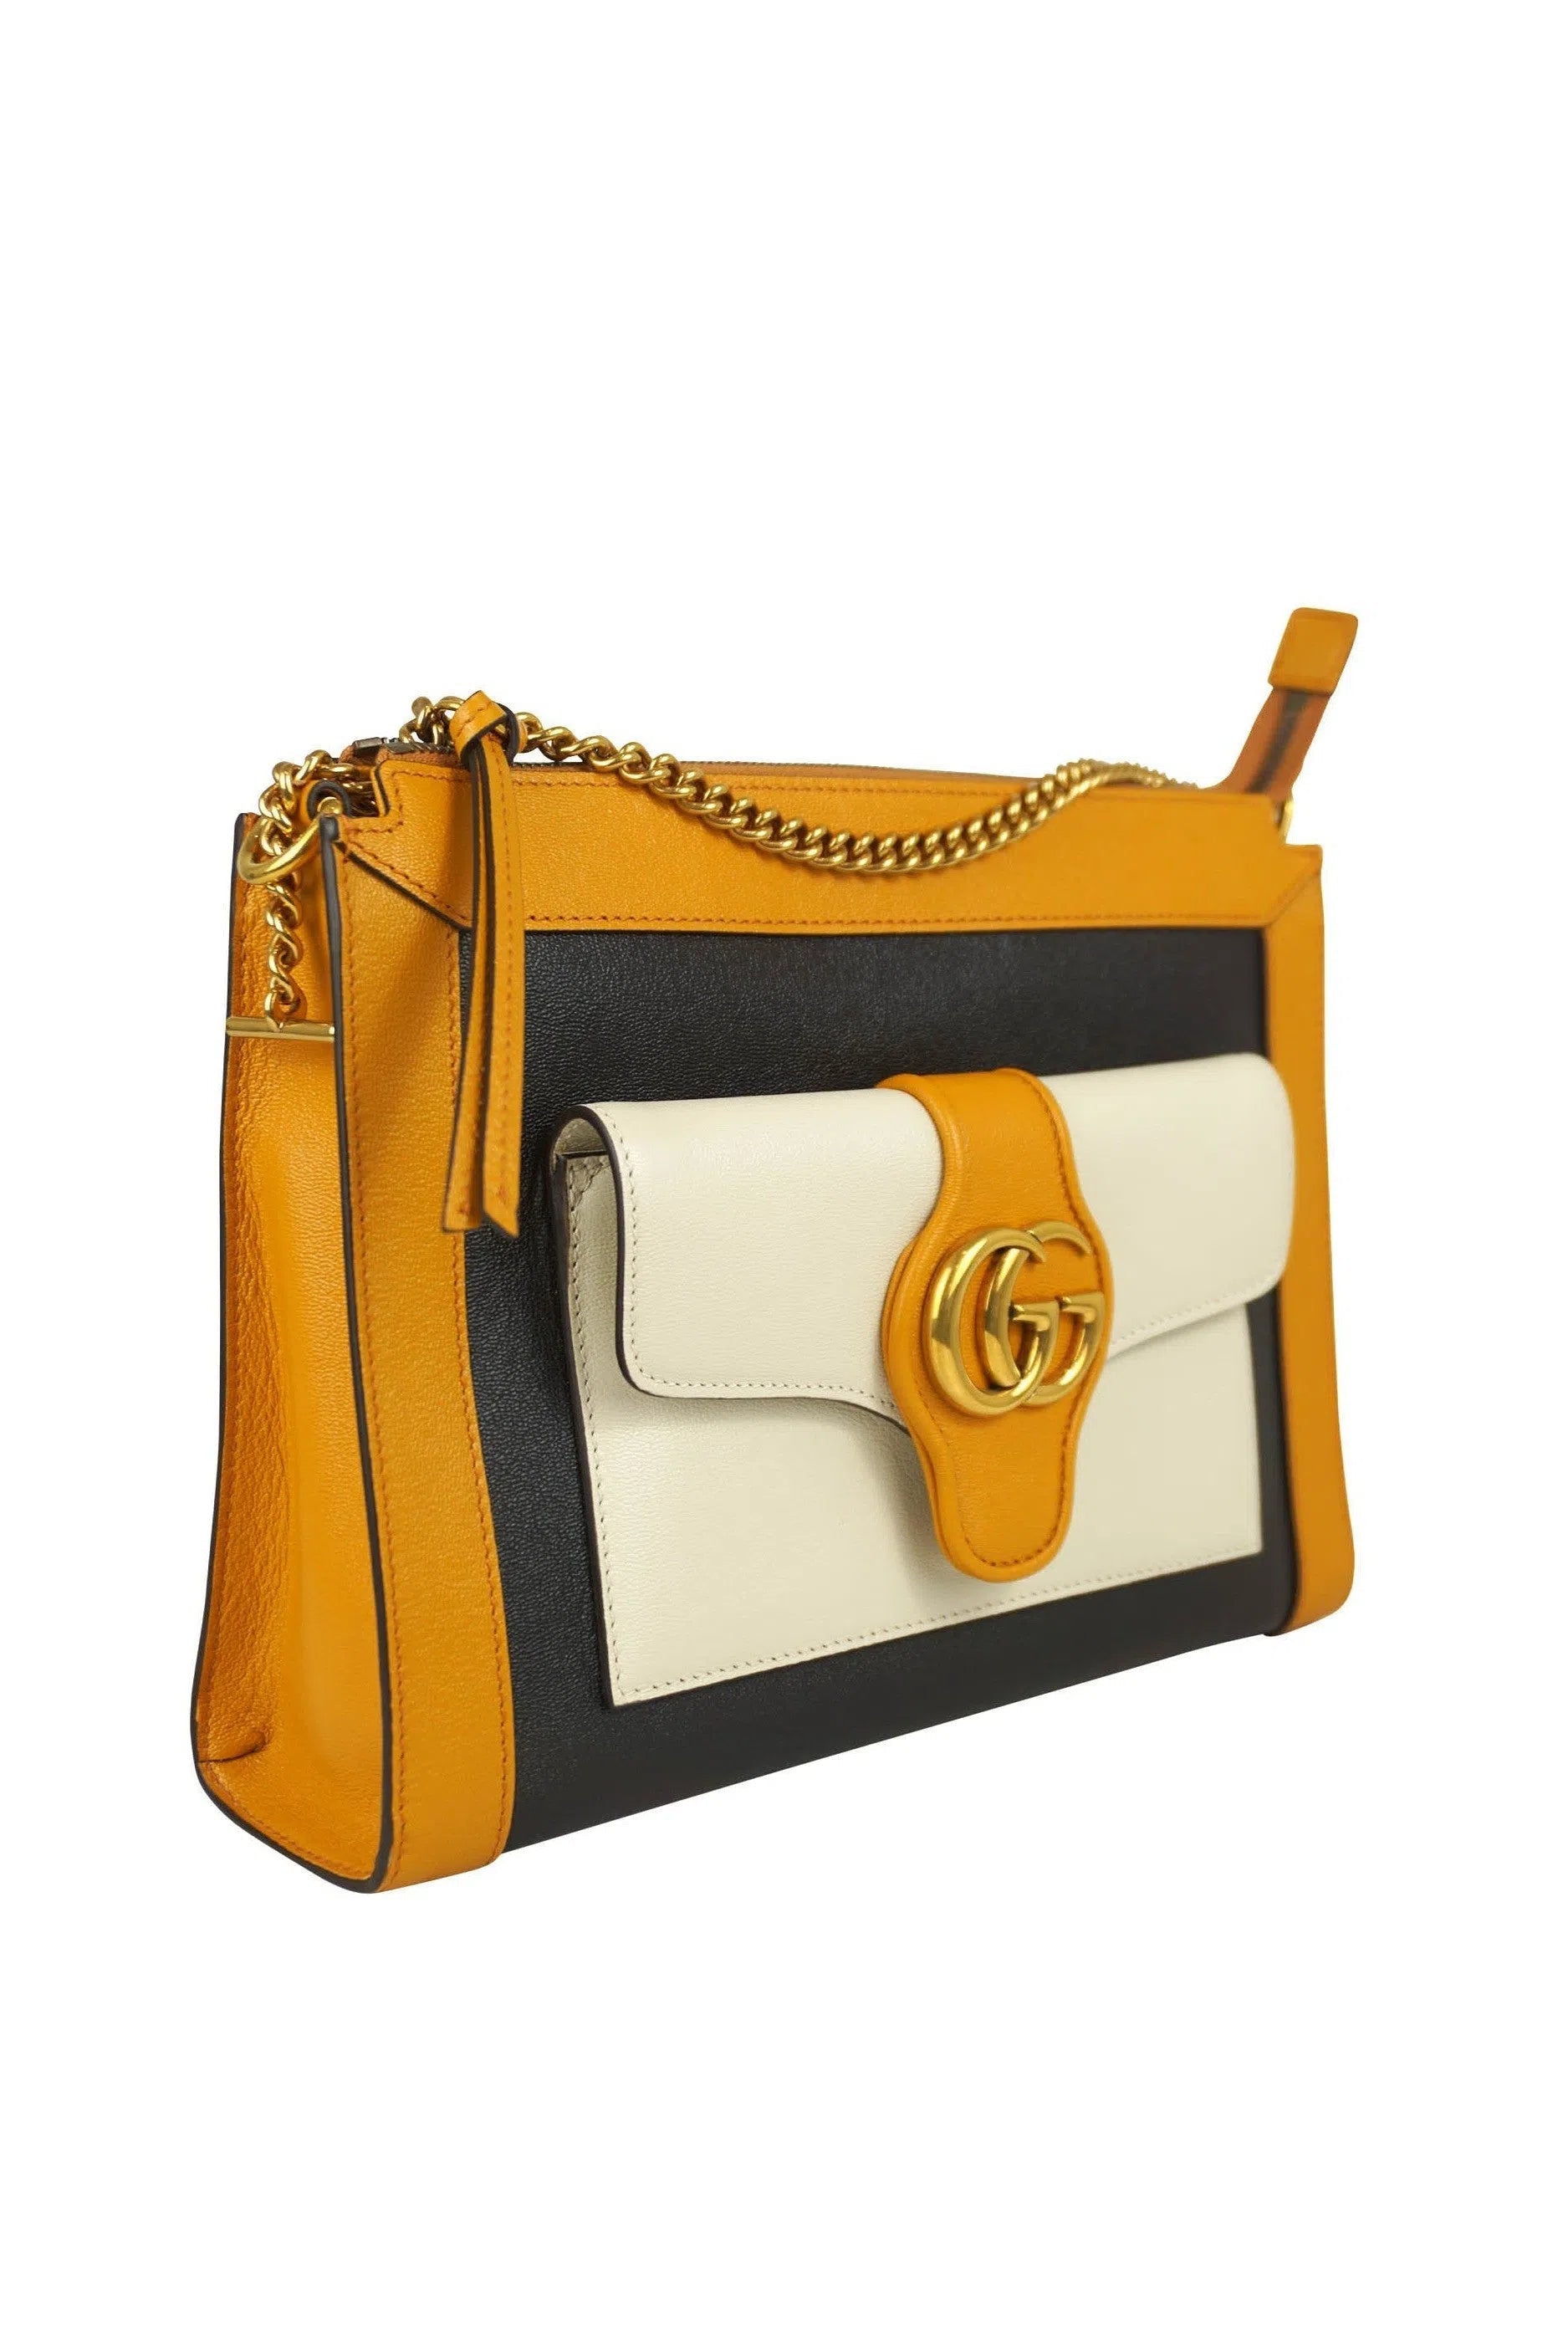 Gucci Dhalia GG Shoulder Bag 2021 - Foxy Couture Carmel